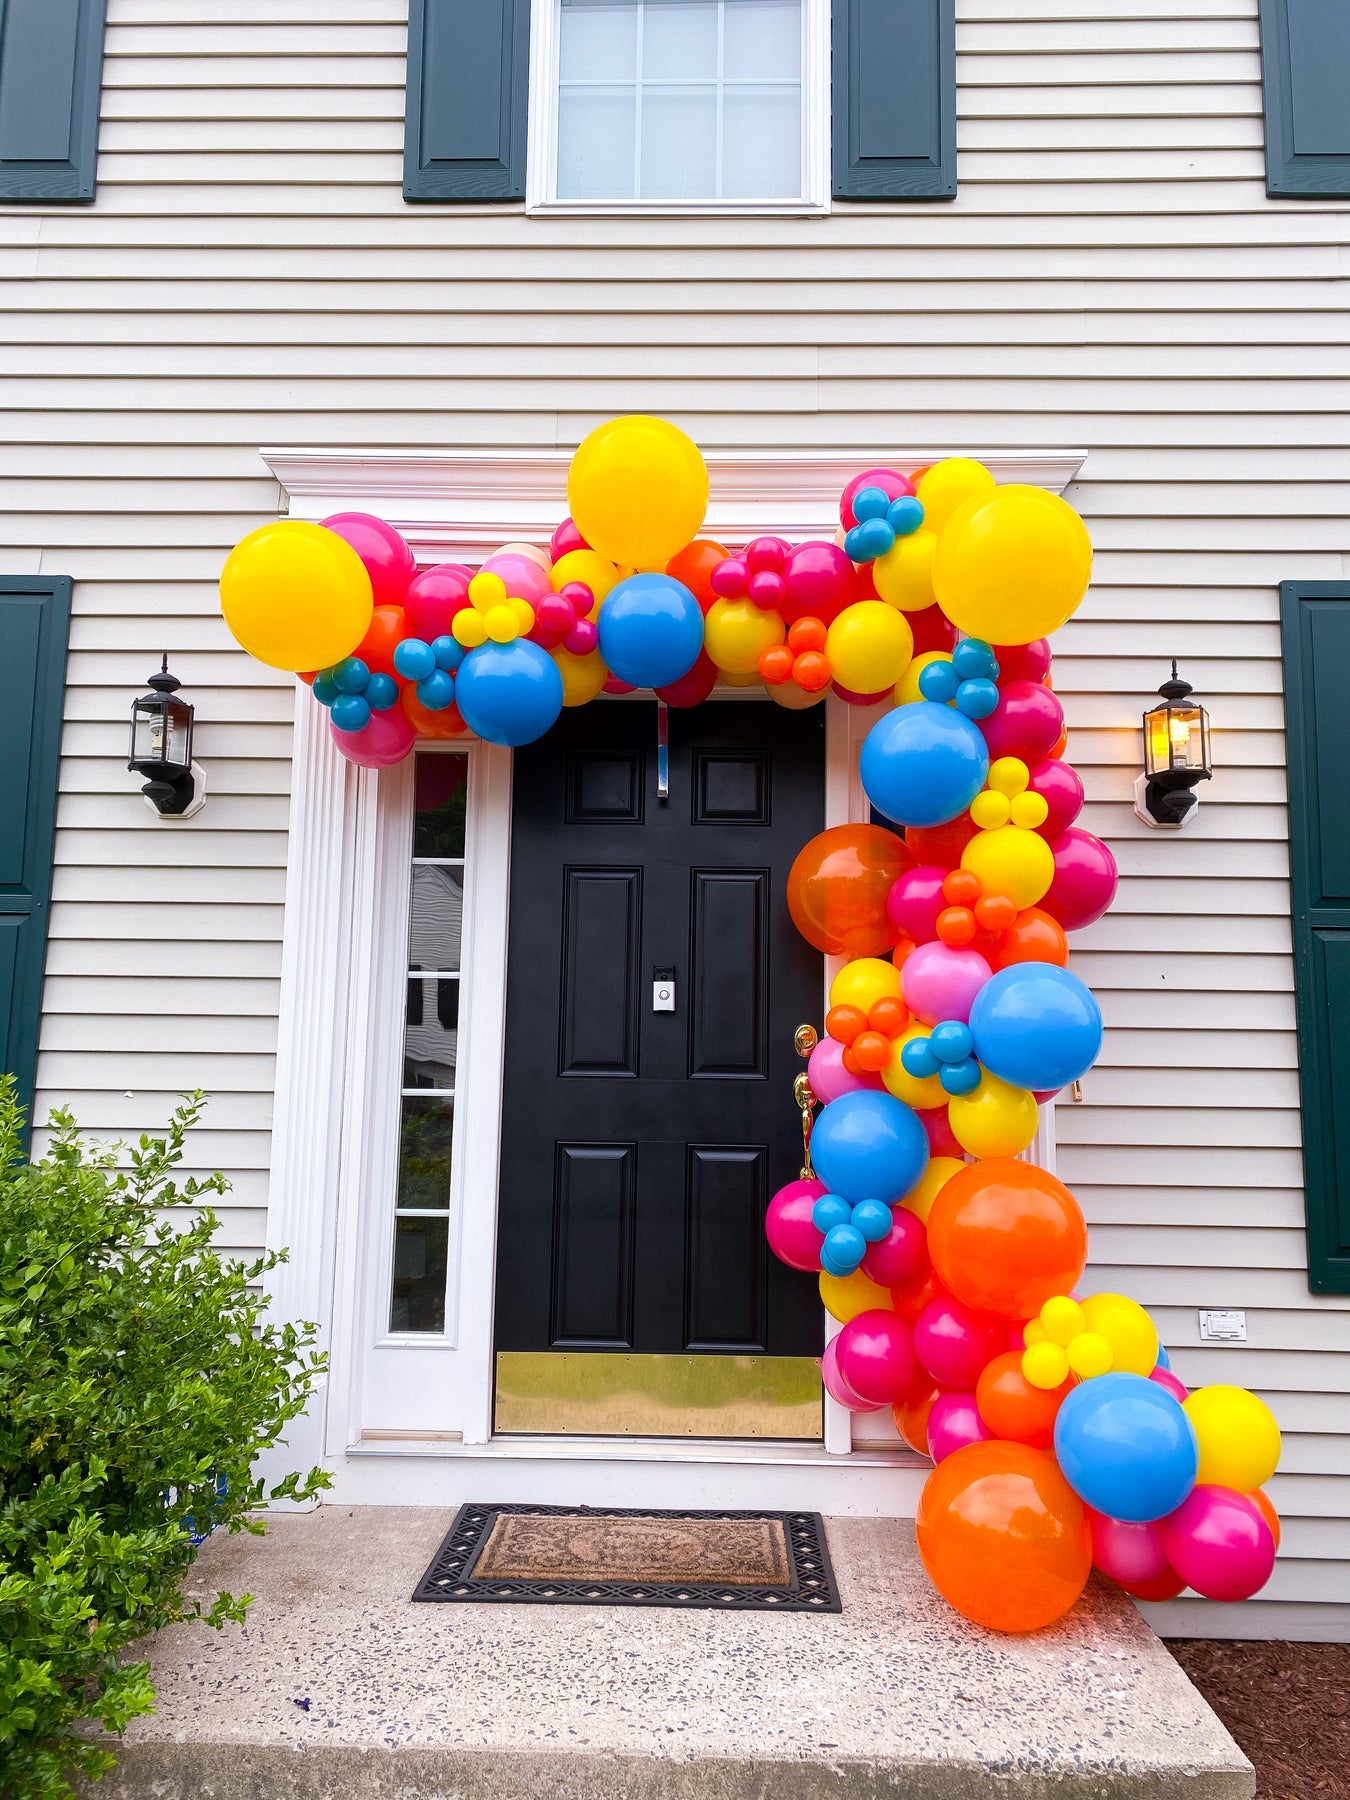 balloon garland in summer colors outside a home in avon connecticut, balloon arch, balloon decor